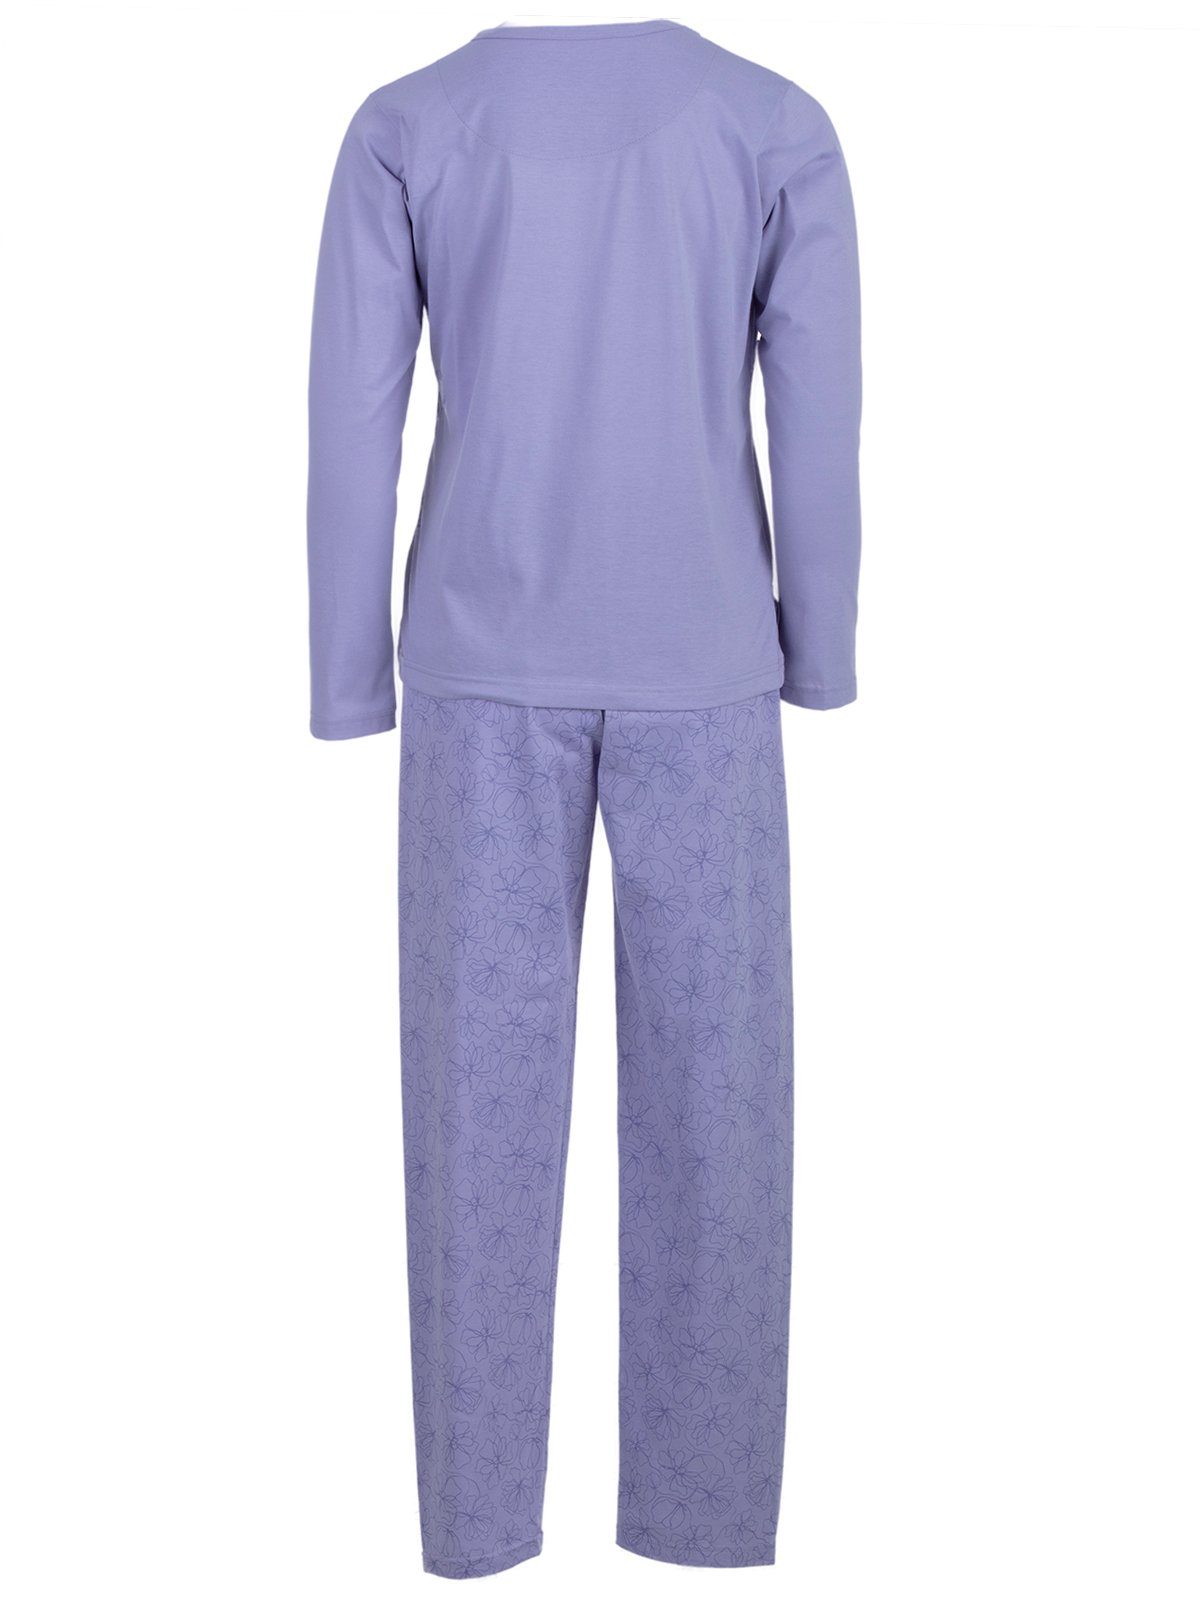 zeitlos Schlafanzug Pyjama Set Langarm Floral Blüten - Kellerfalte flieder